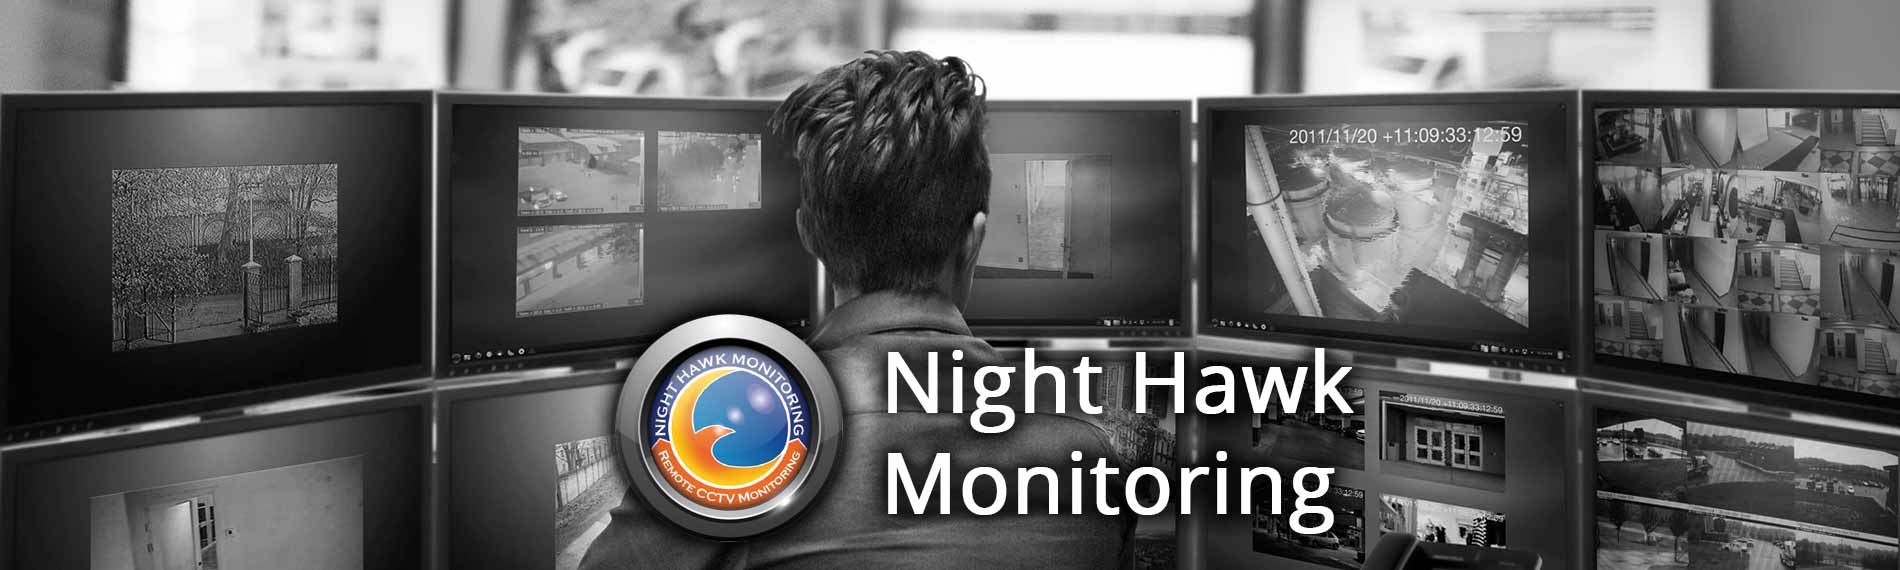 Remote Video Surveillance Honolulu - Live Security Cameras Monitoring Honolulu Hawaii